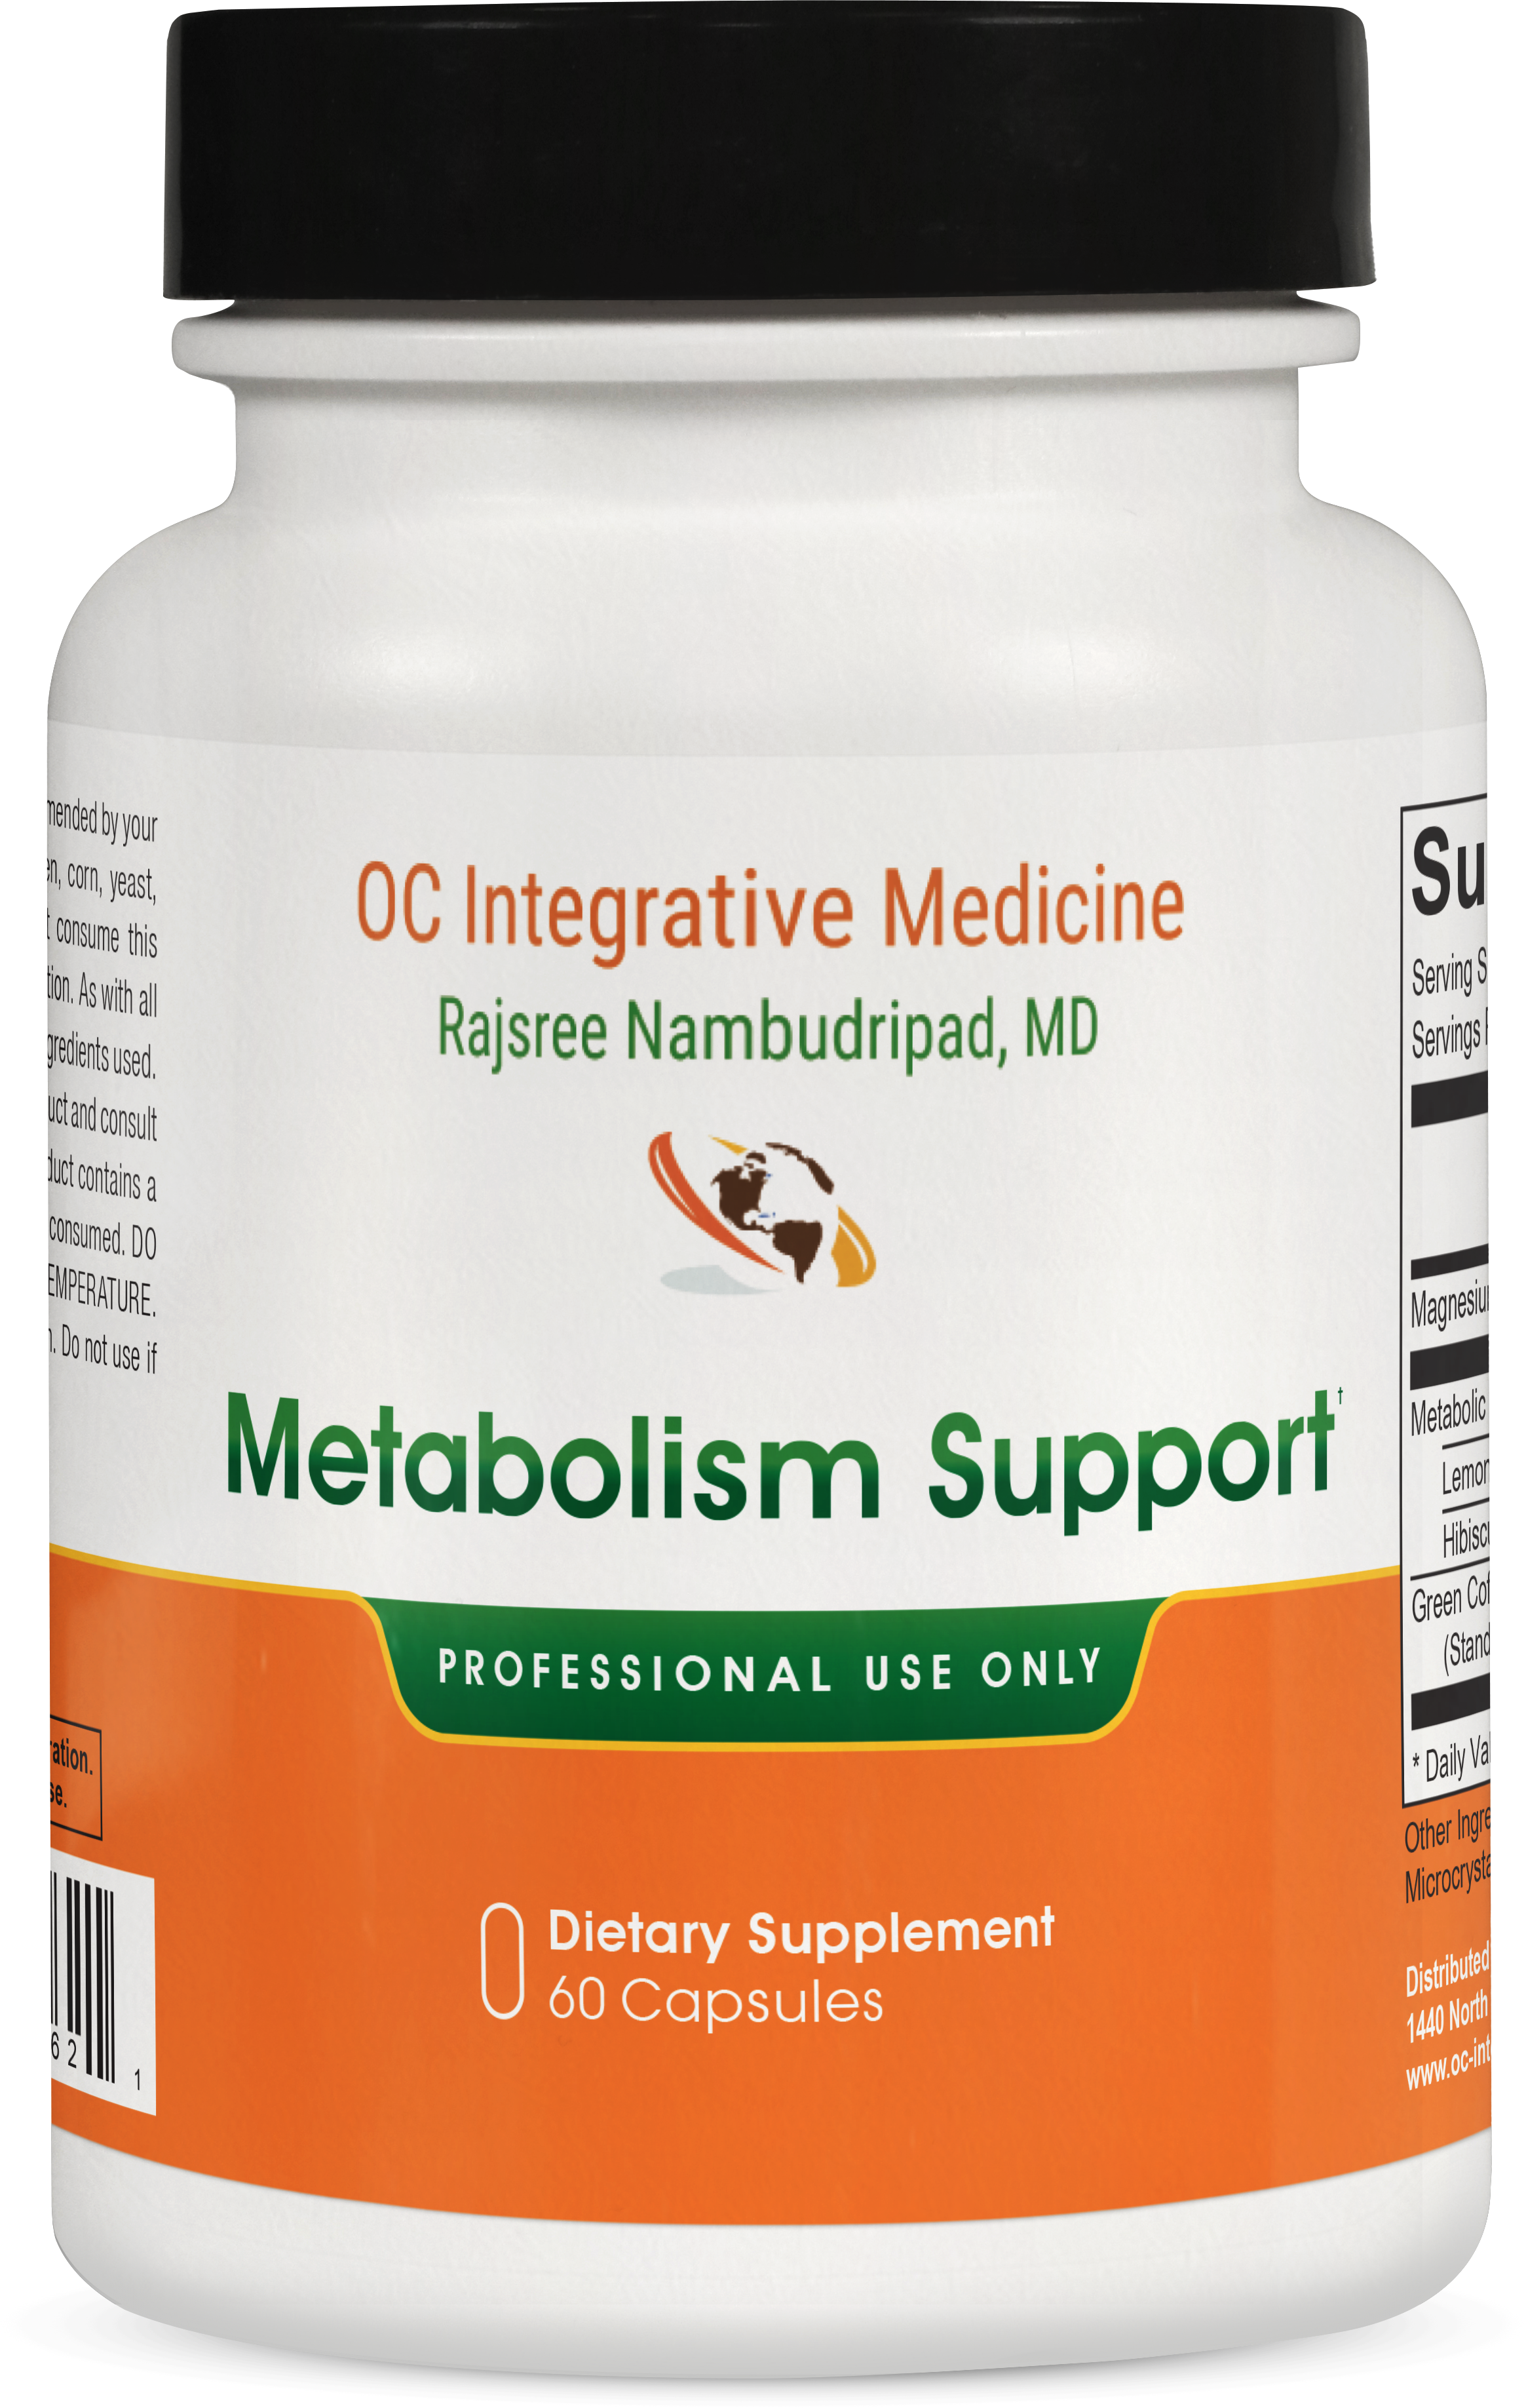 Metabolism support vitamins